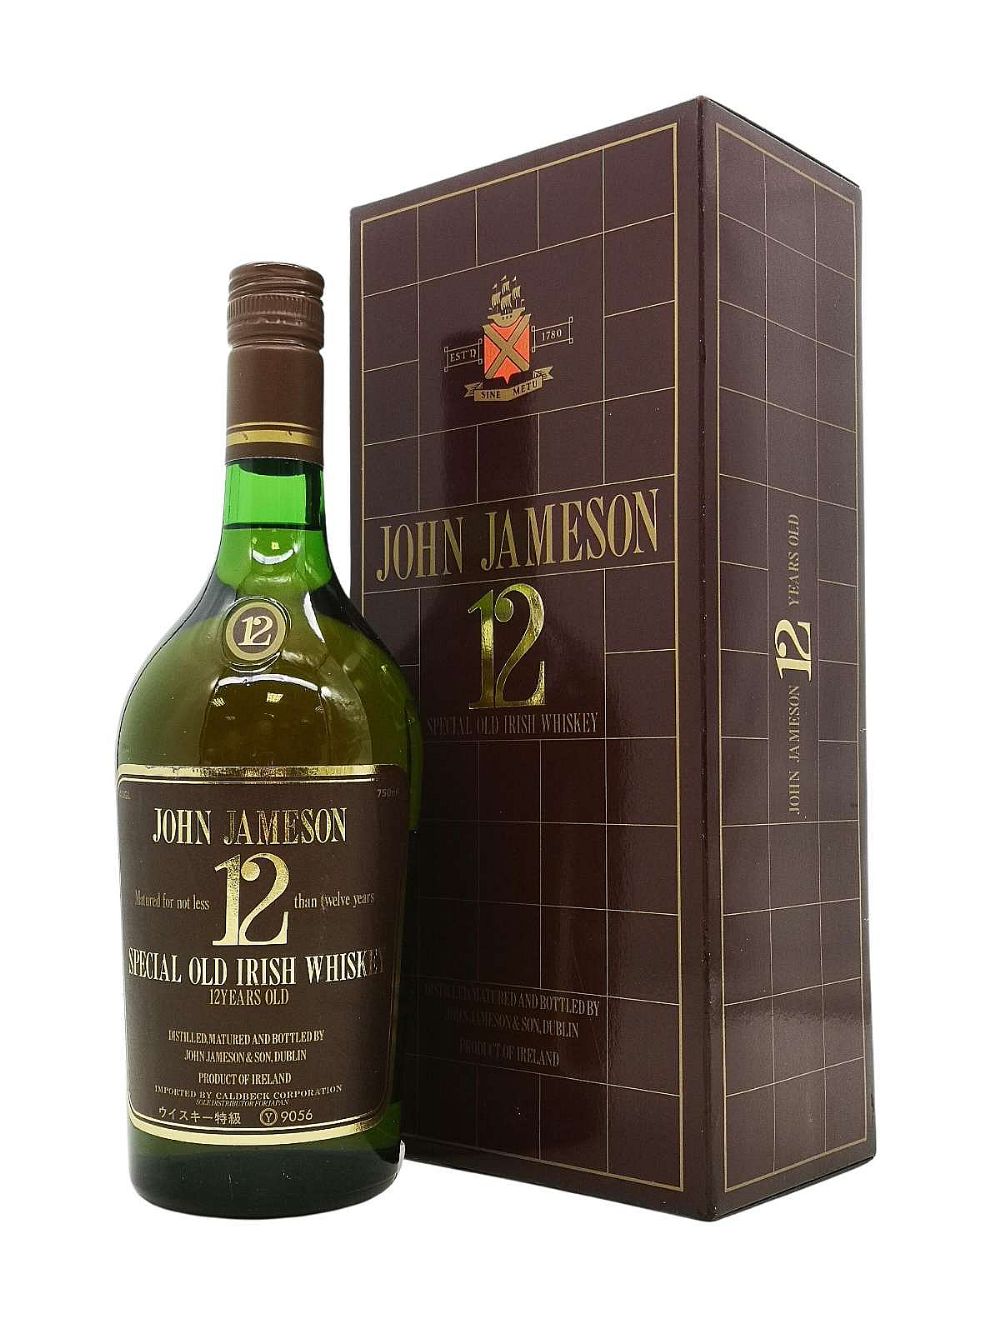 John Jameson 12 year old Special Old Irish Whiskey, Japanese Exclusive bottling